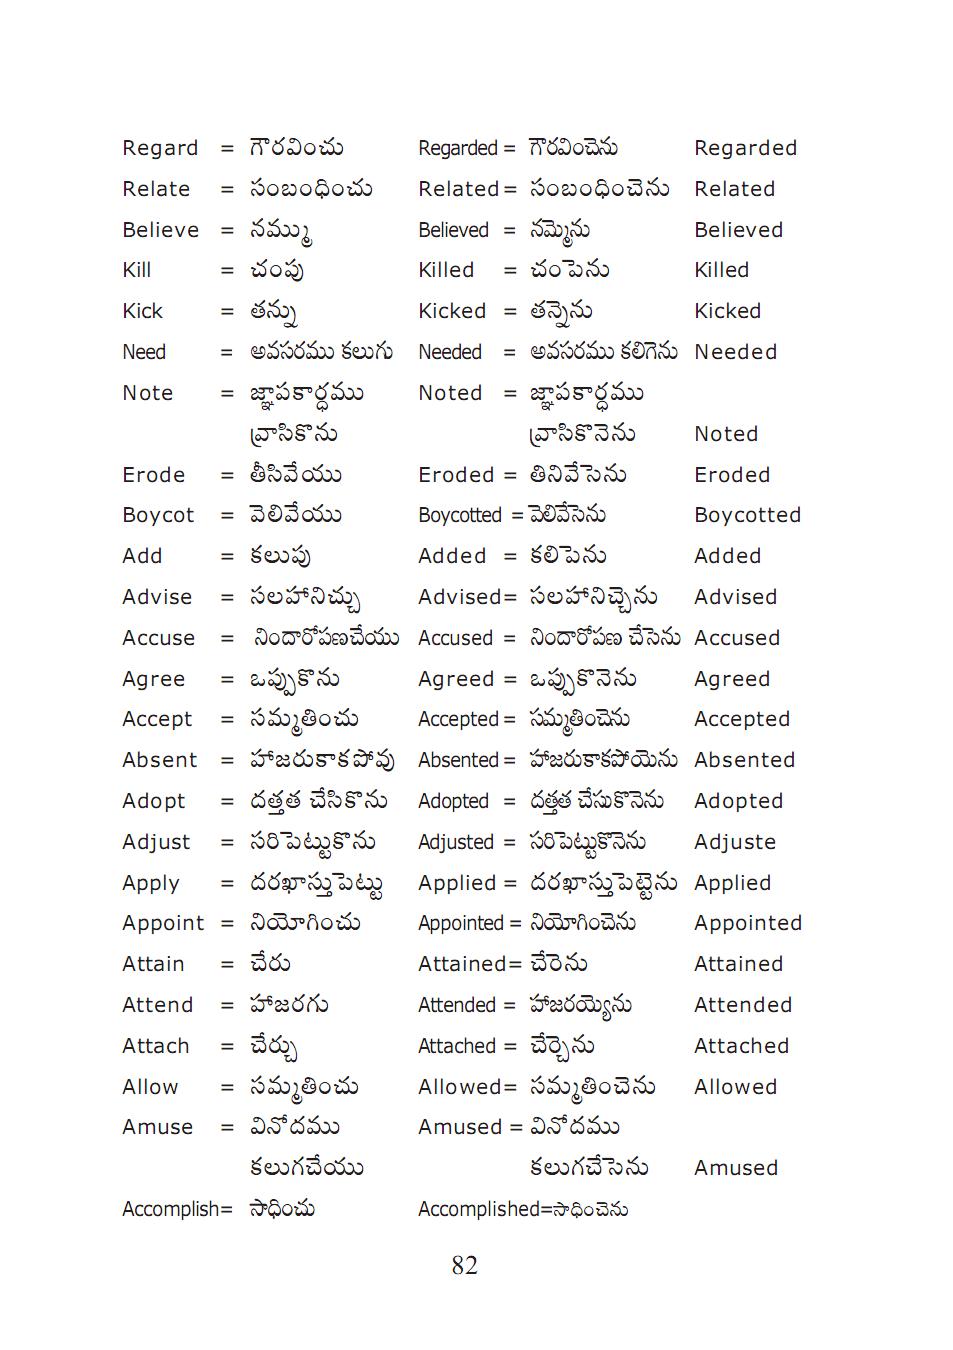 Telugu Tenses Chart